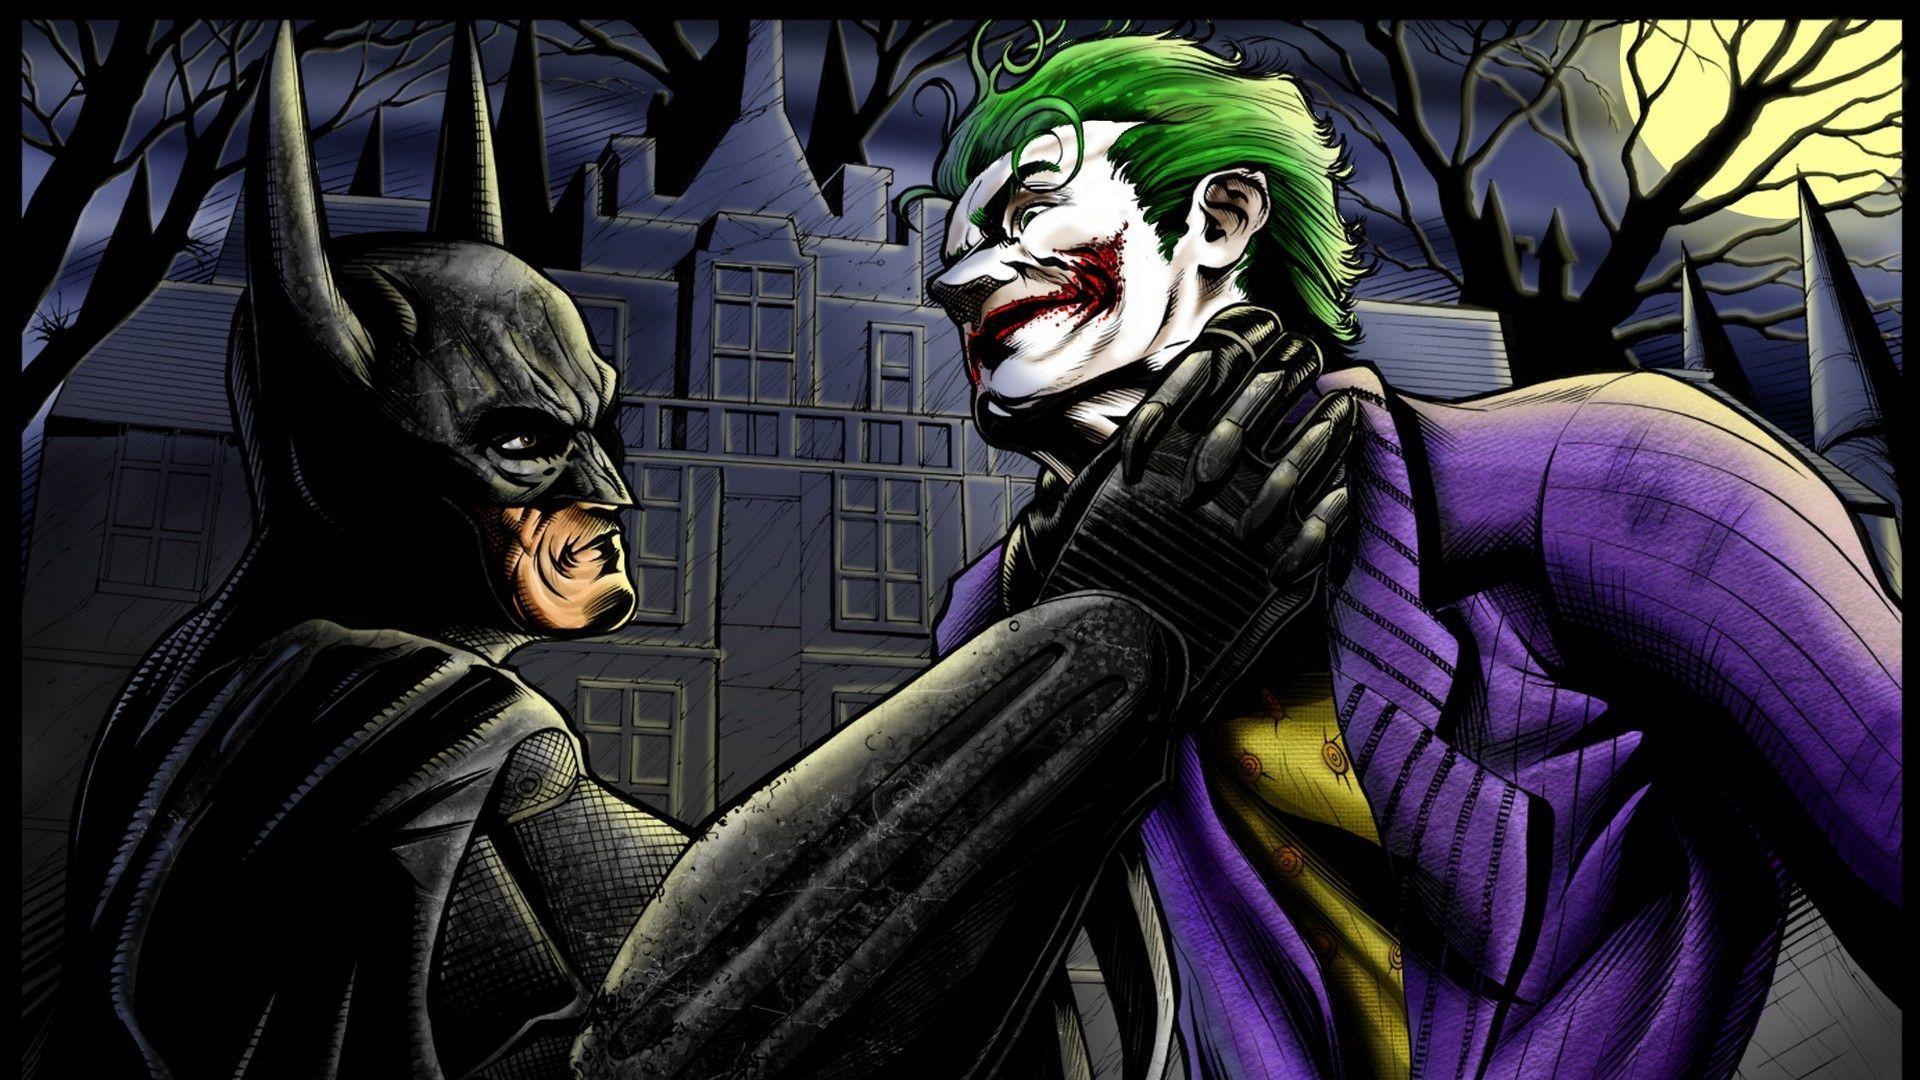 Animated Joker Wallpapers - Top Free Animated Joker Backgrounds ...